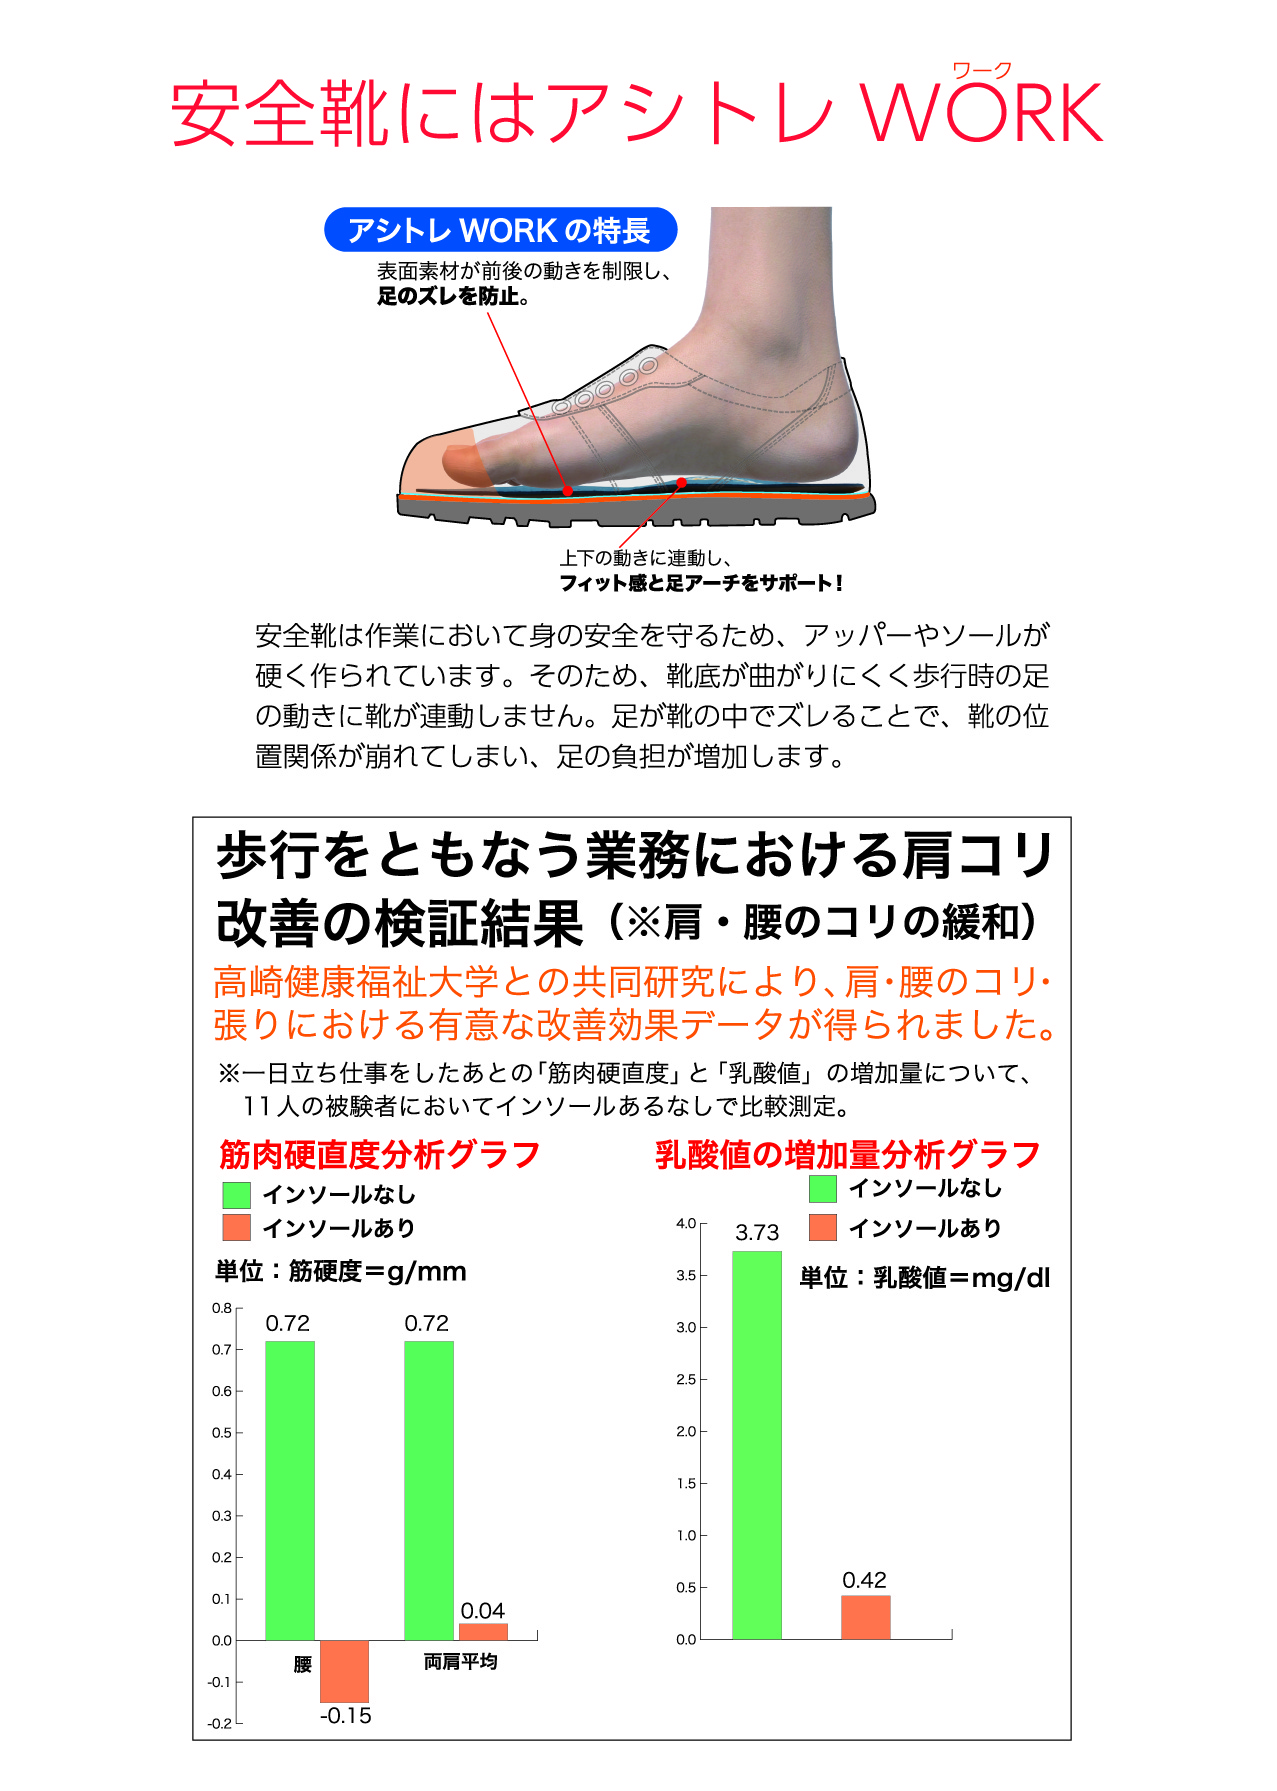 ASHI-TORE WORK | インソールで足から健康な体を作るBMZ